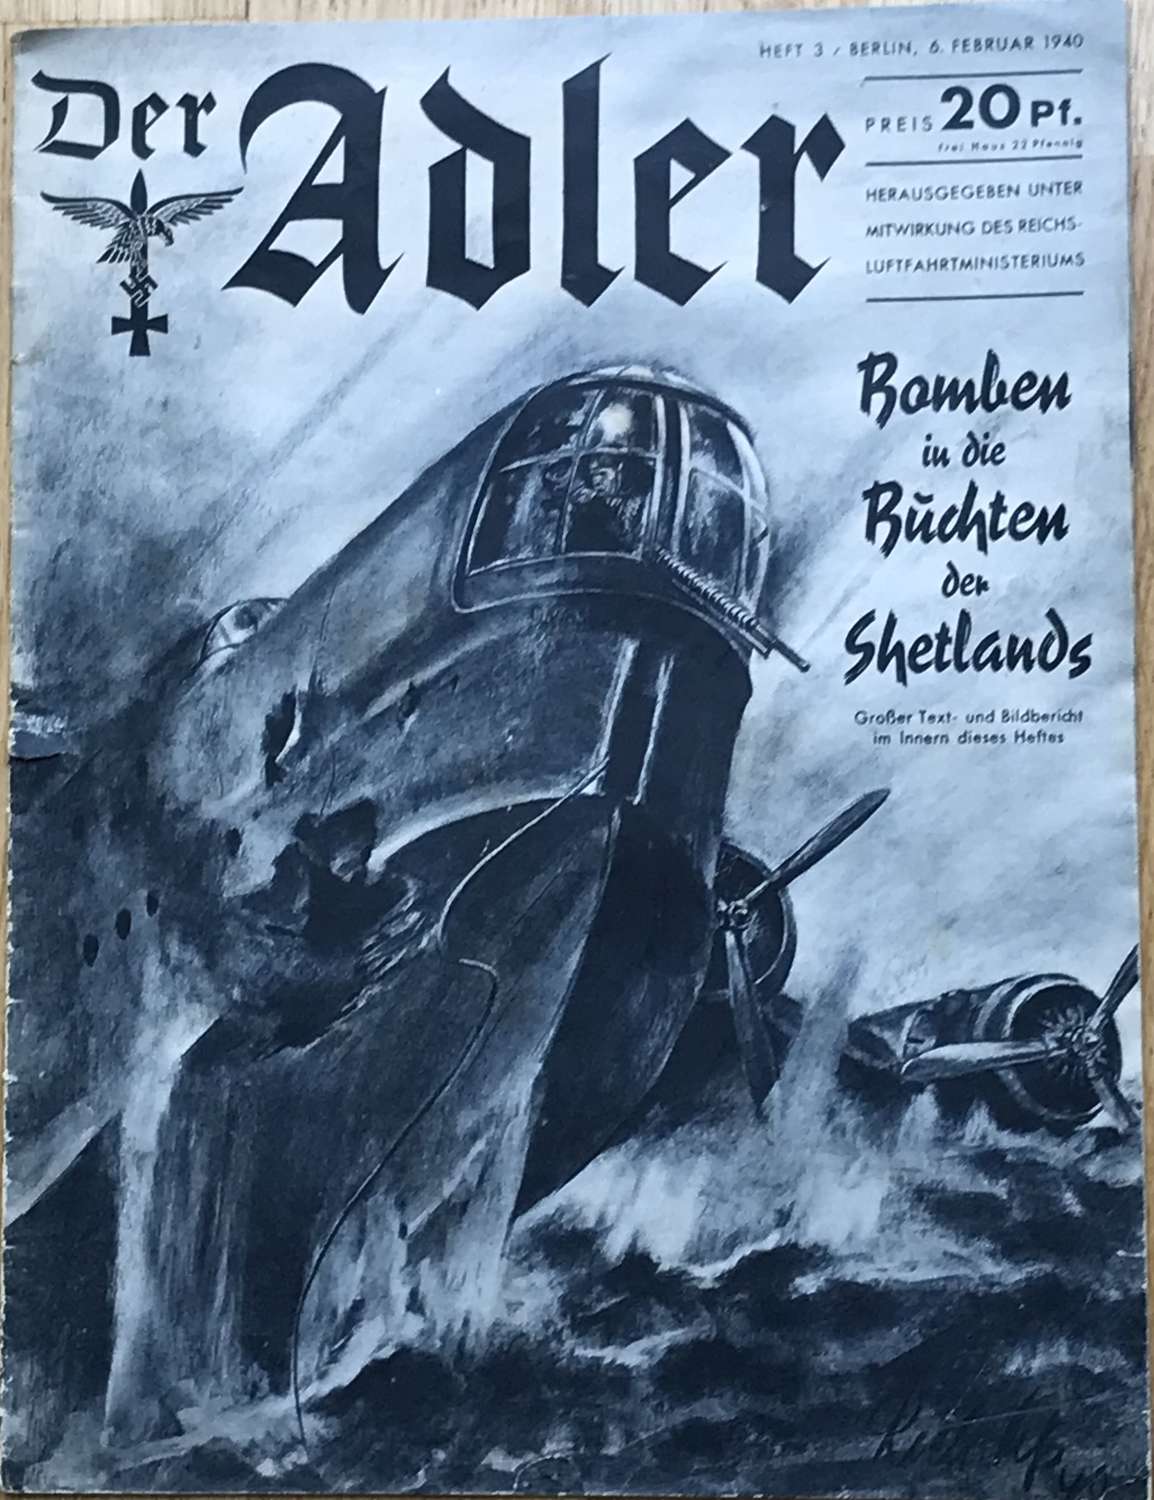 Alder magazine dated February 1940 air raids  on Shetland Islands